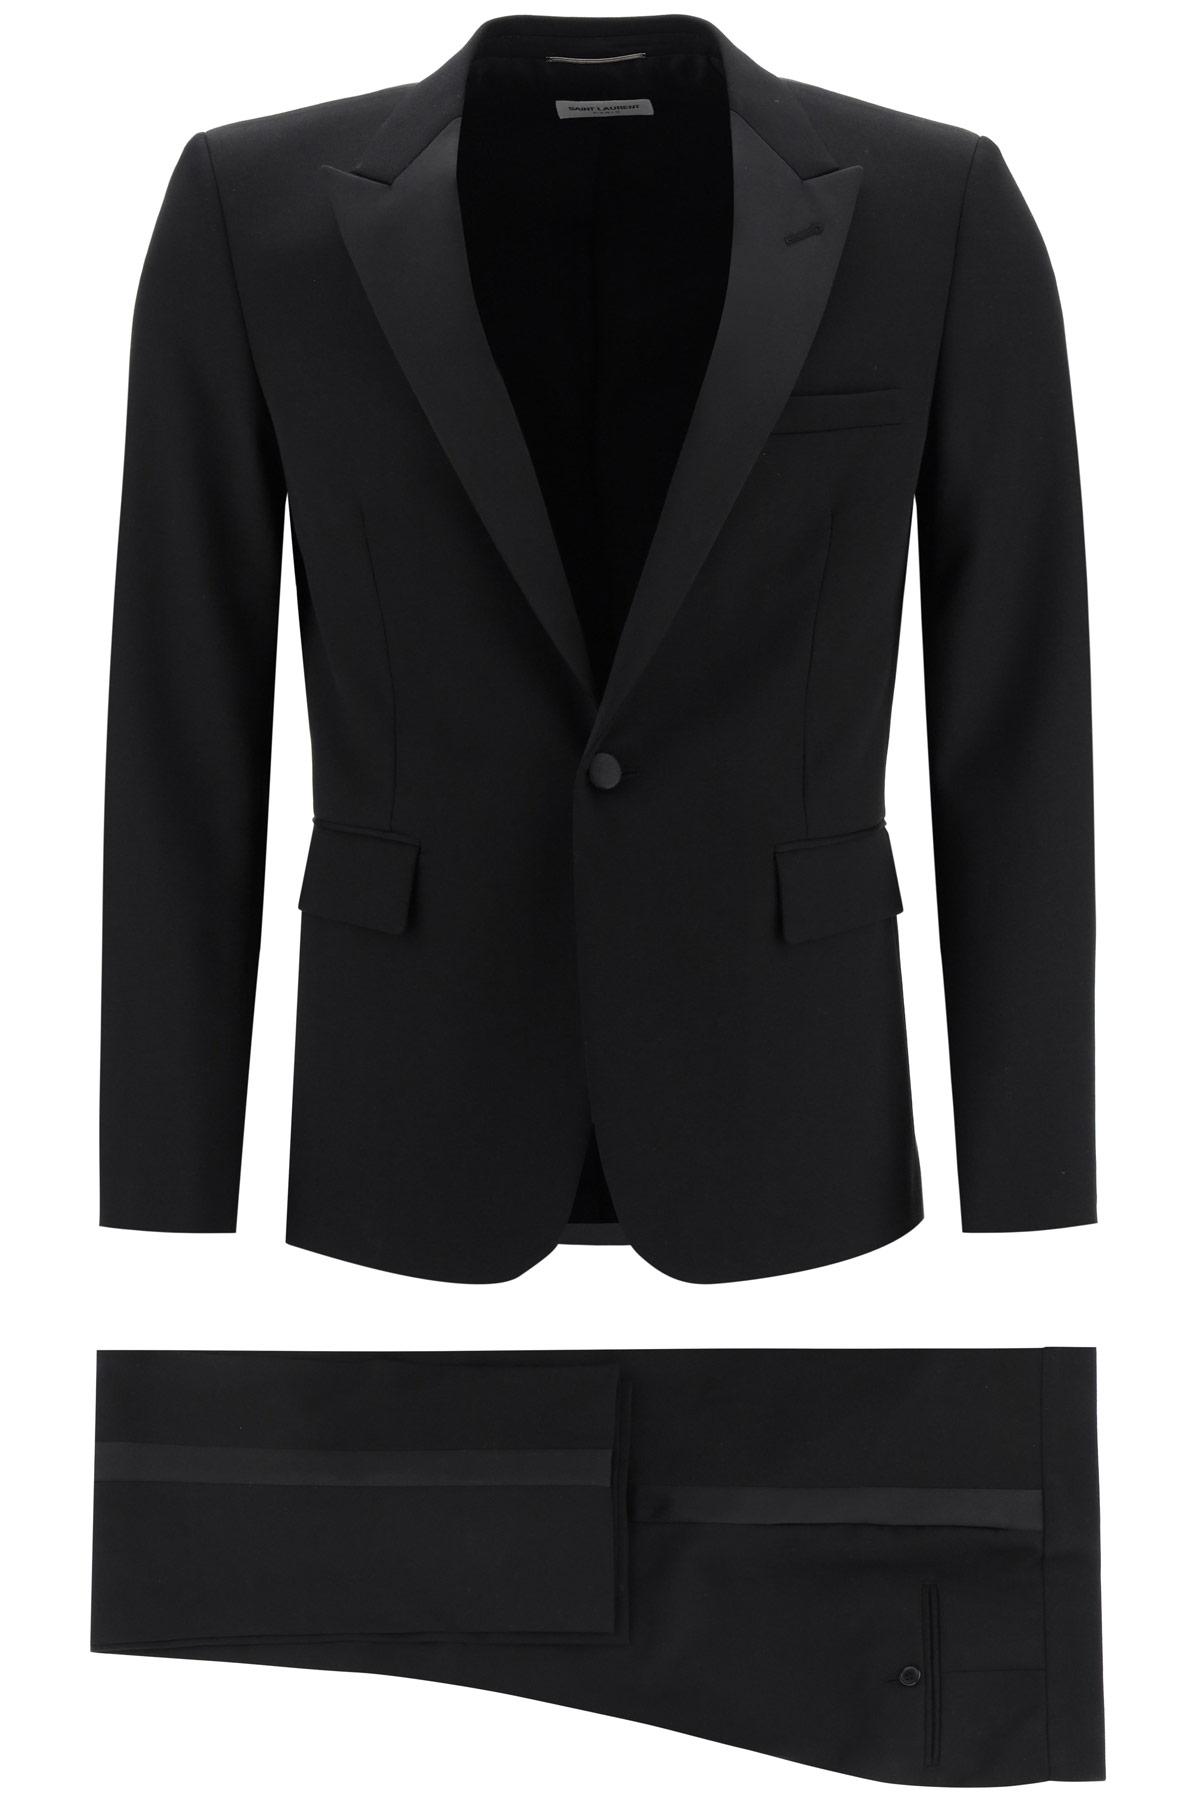 Saint Laurent Tuxedo Suit in Black for Men | Lyst